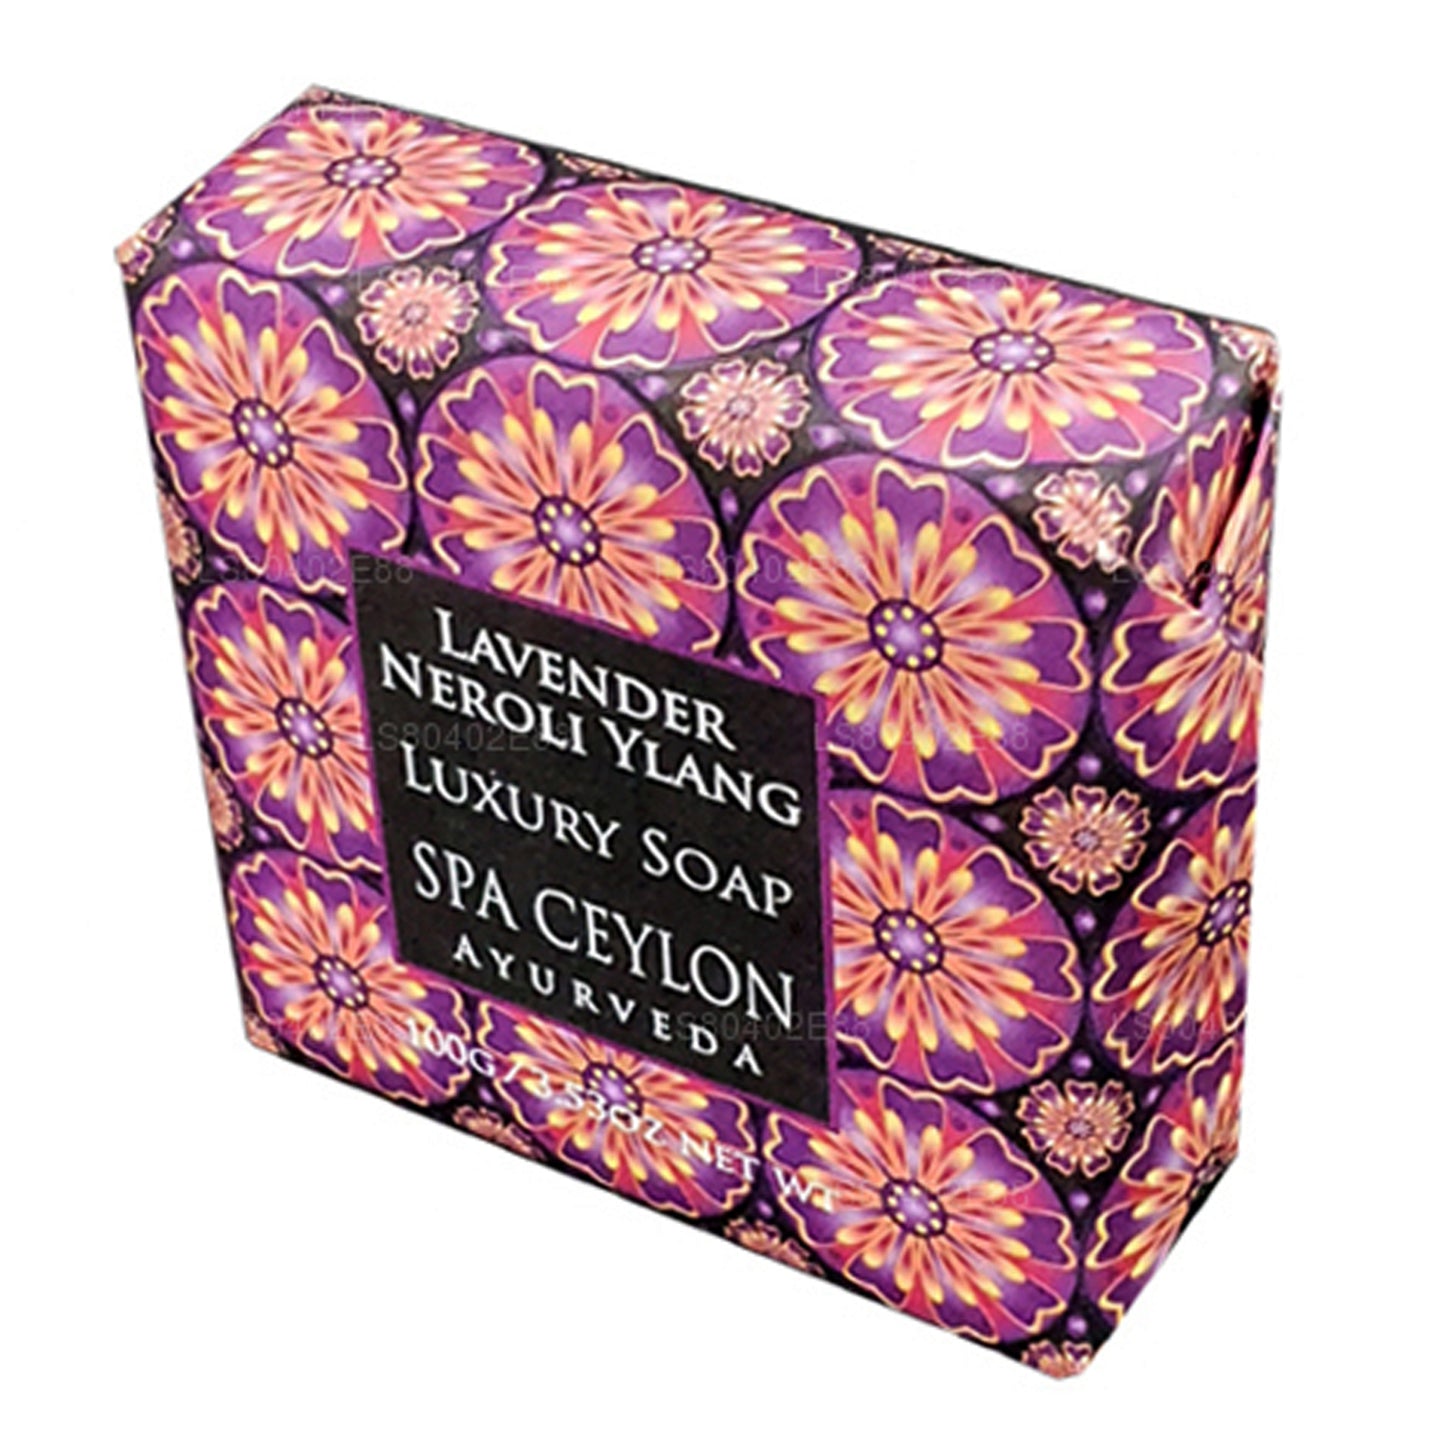 Spa Ceylon Lavender Neroli Ylang Luksusowe Mydło (100g)